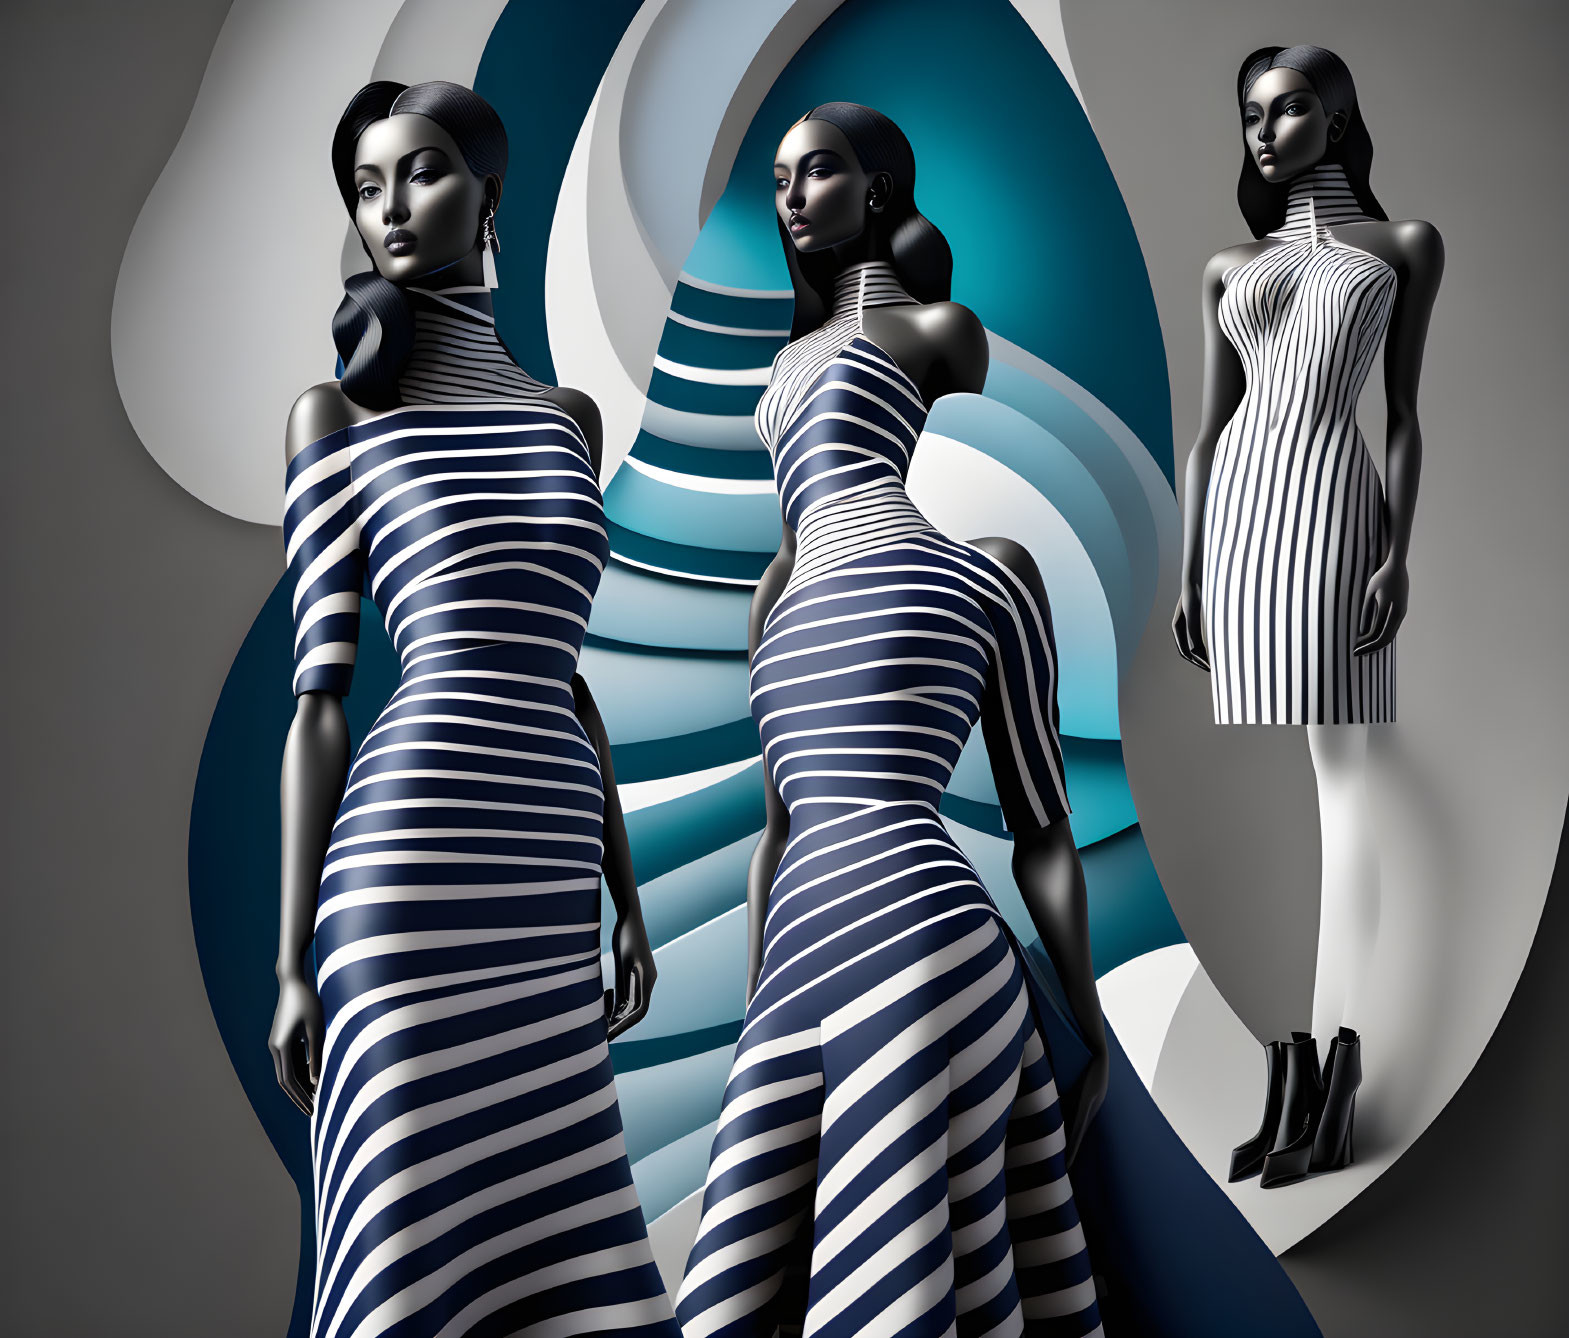 clothing made of zebra corrugated cardboard